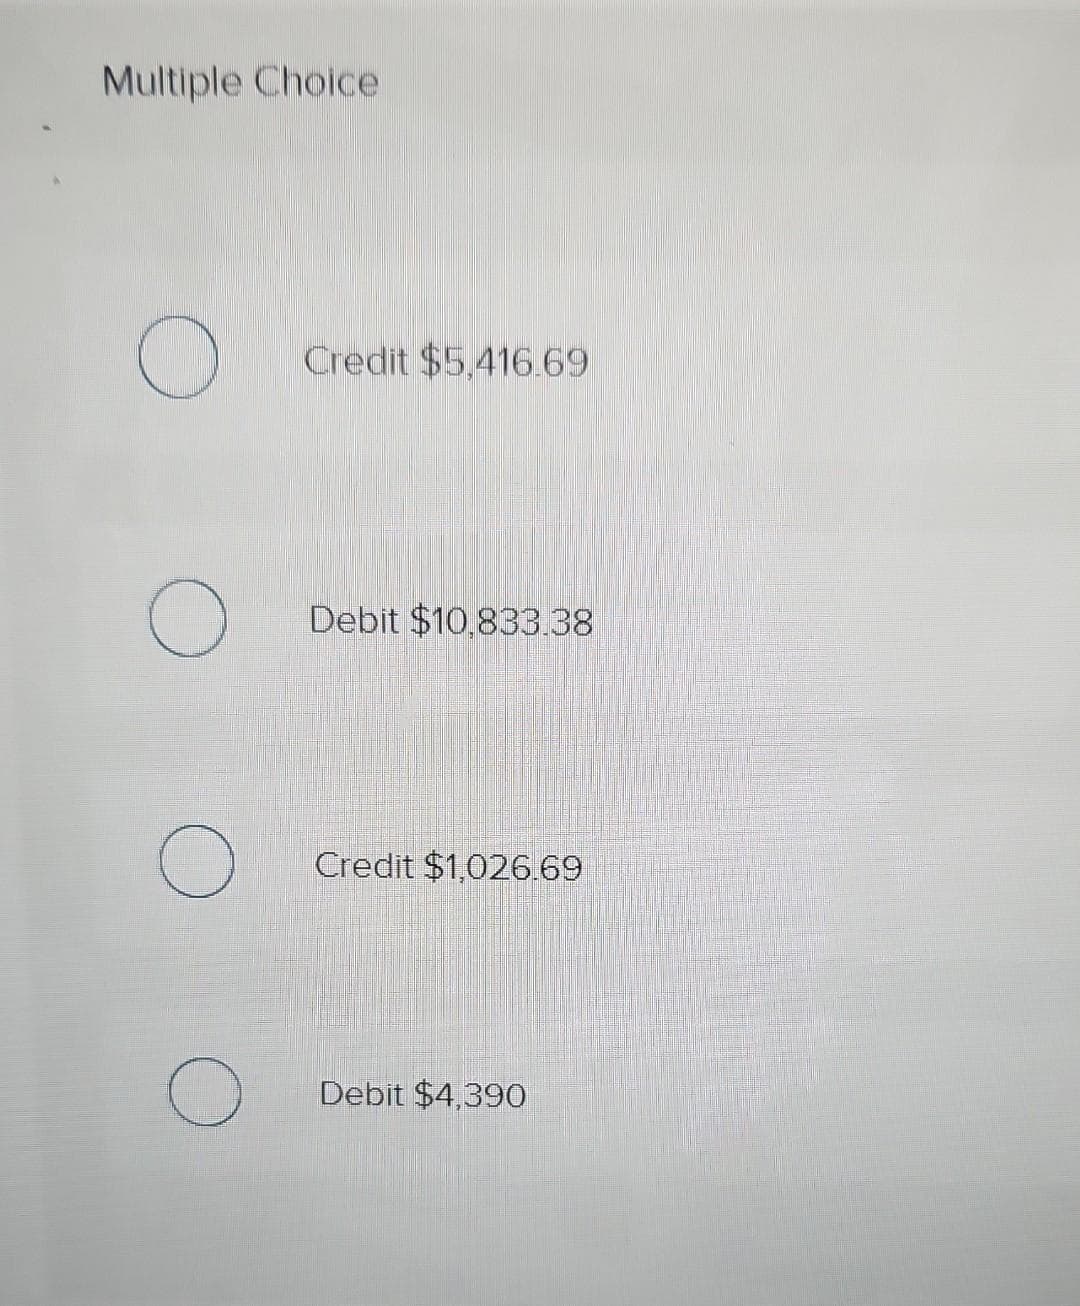 Multiple Choice
O
O
O
Credit $5,416.69
Debit $10,833.38
Credit $1,026.69
Debit $4,390